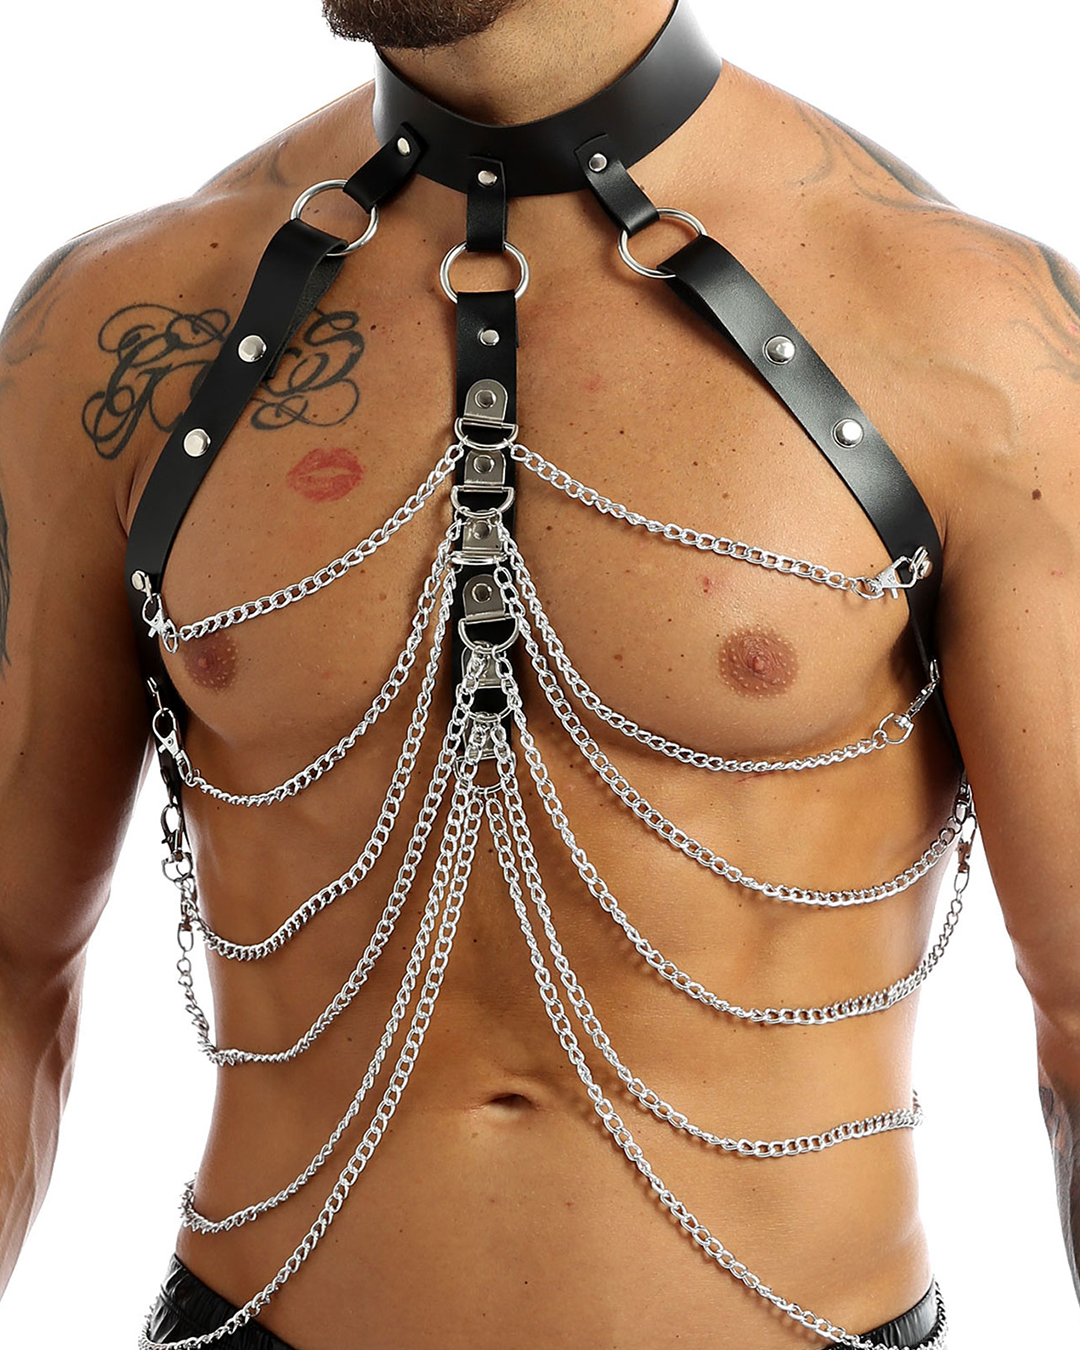 Chain Halter Harnesses